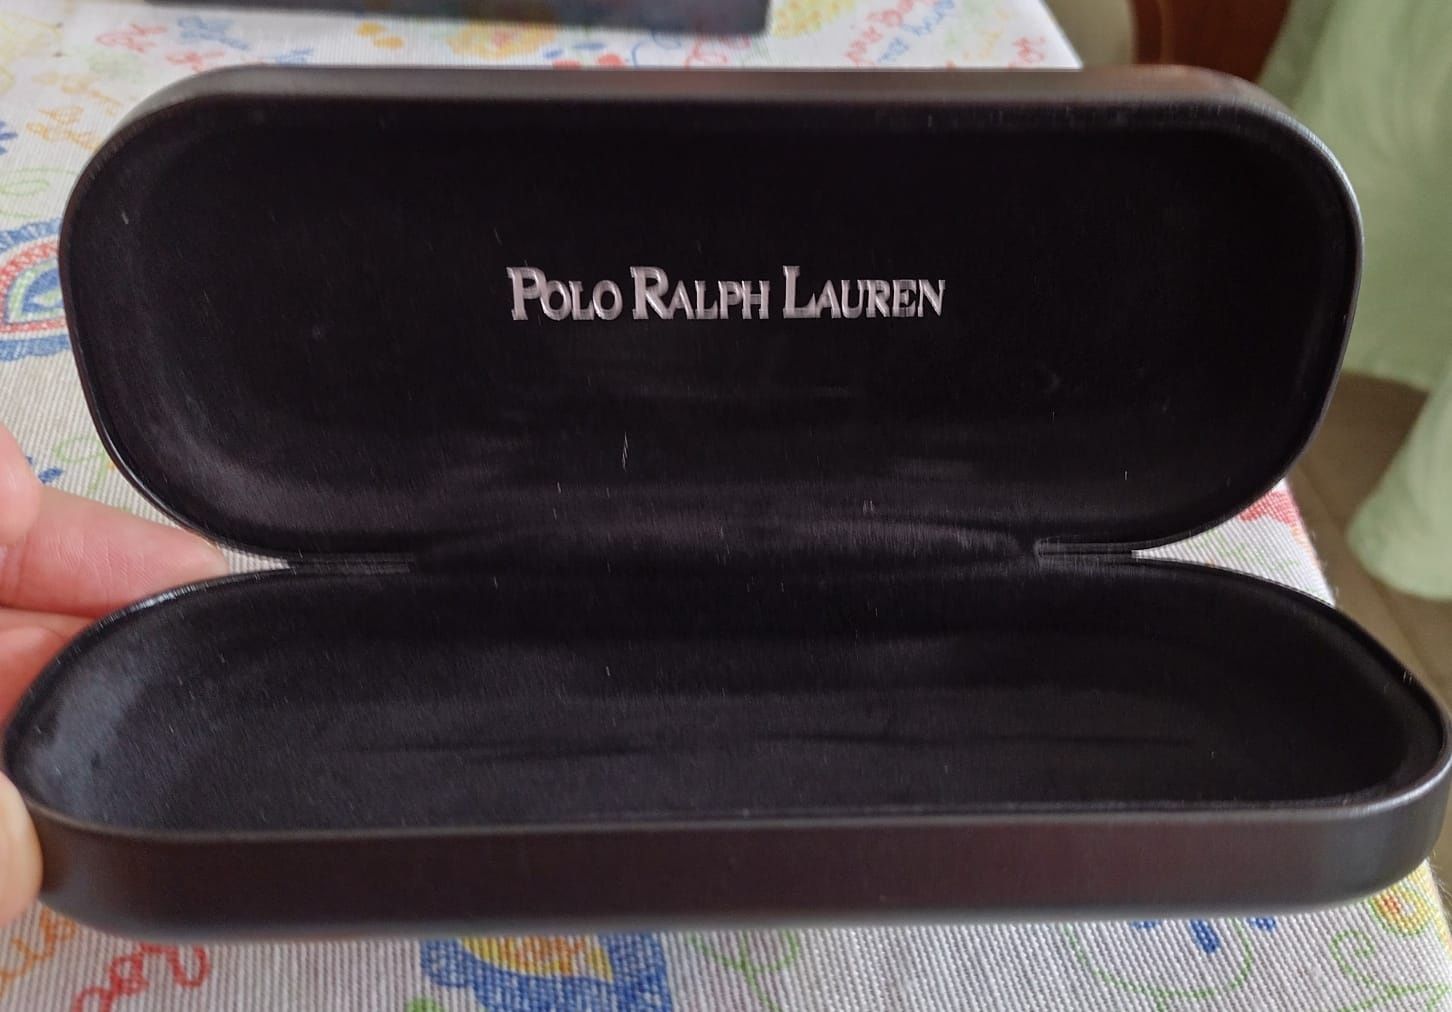 Polo Ralph Lauren caixa para óculos bom estado